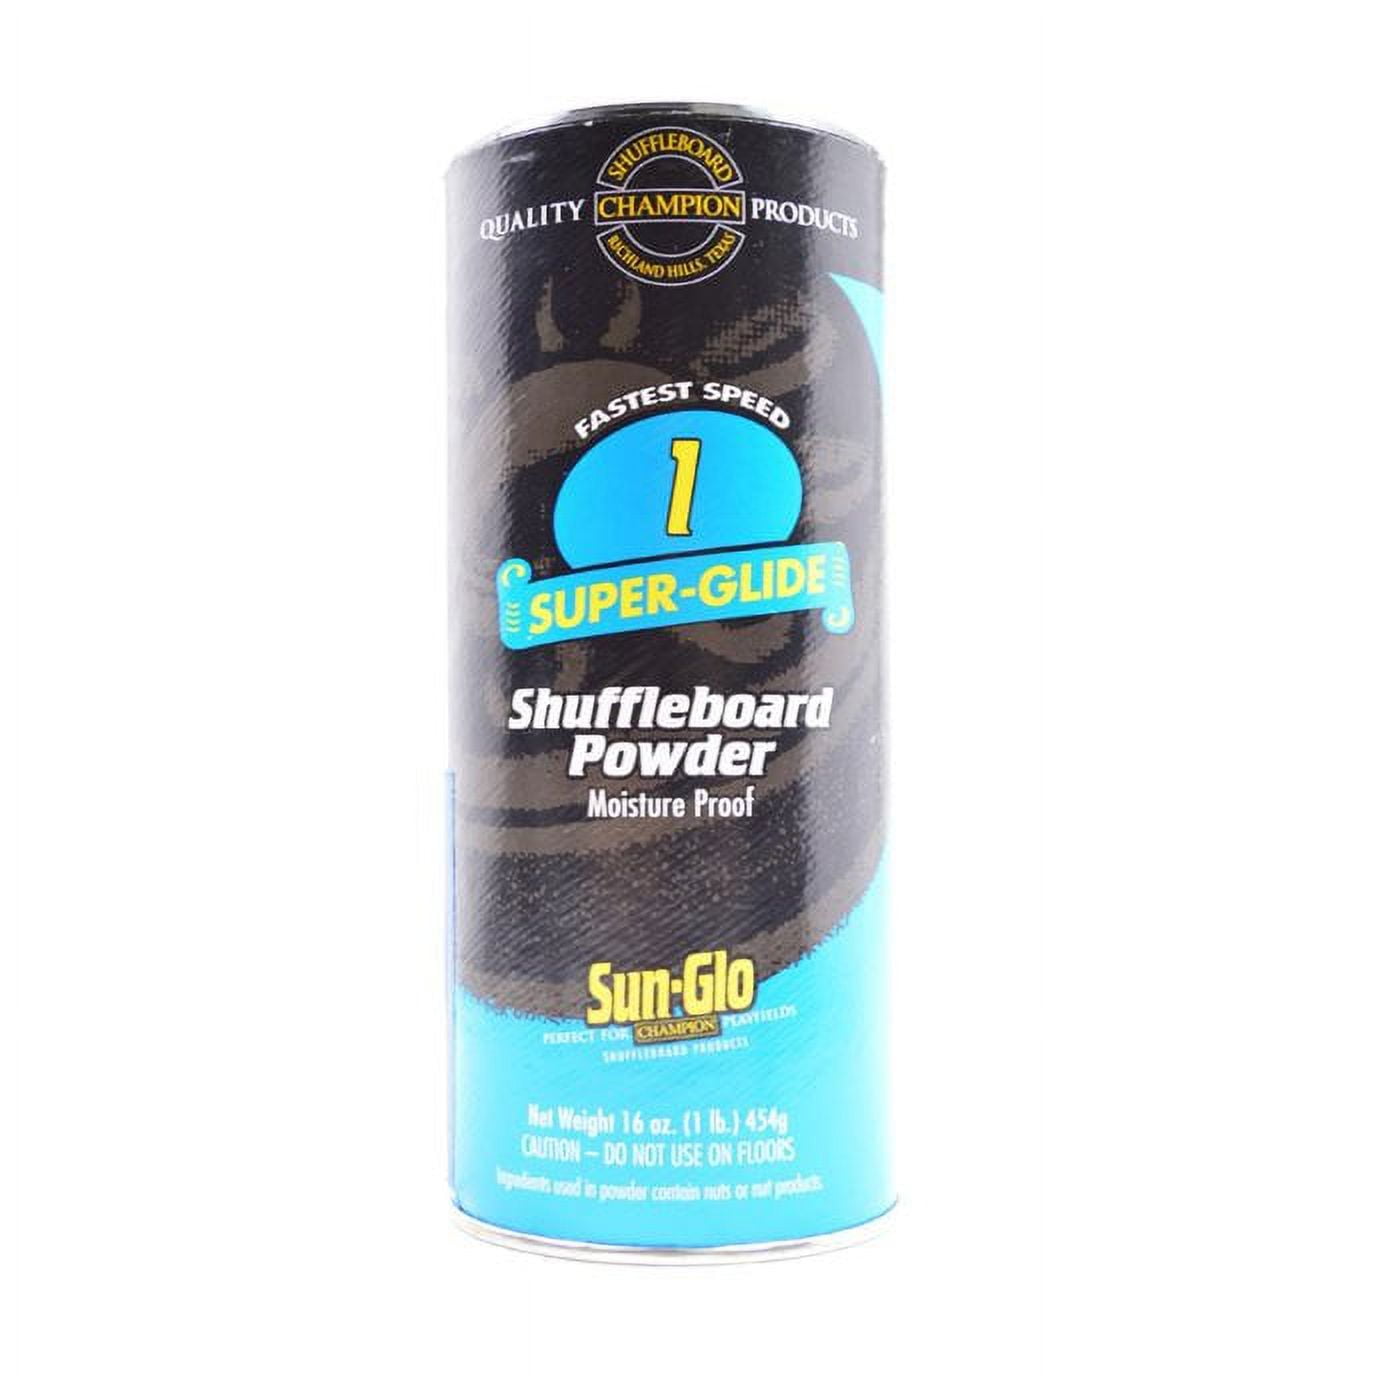 Triple Crown Silicone Shuffleboard Spray Can 12 oz